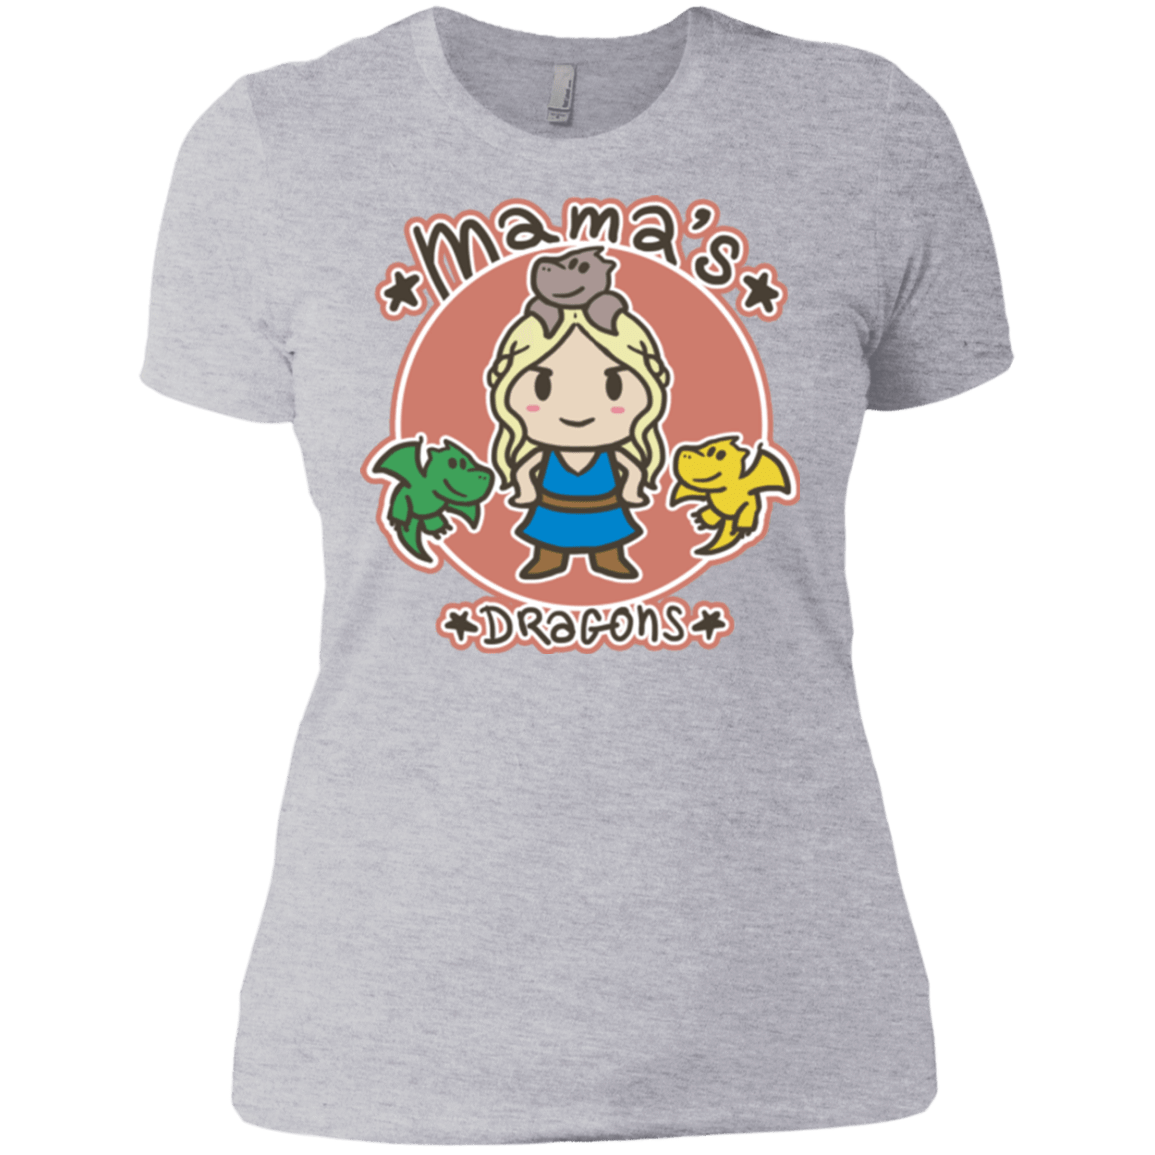 T-Shirts Heather Grey / X-Small Mamas Dragons Women's Premium T-Shirt